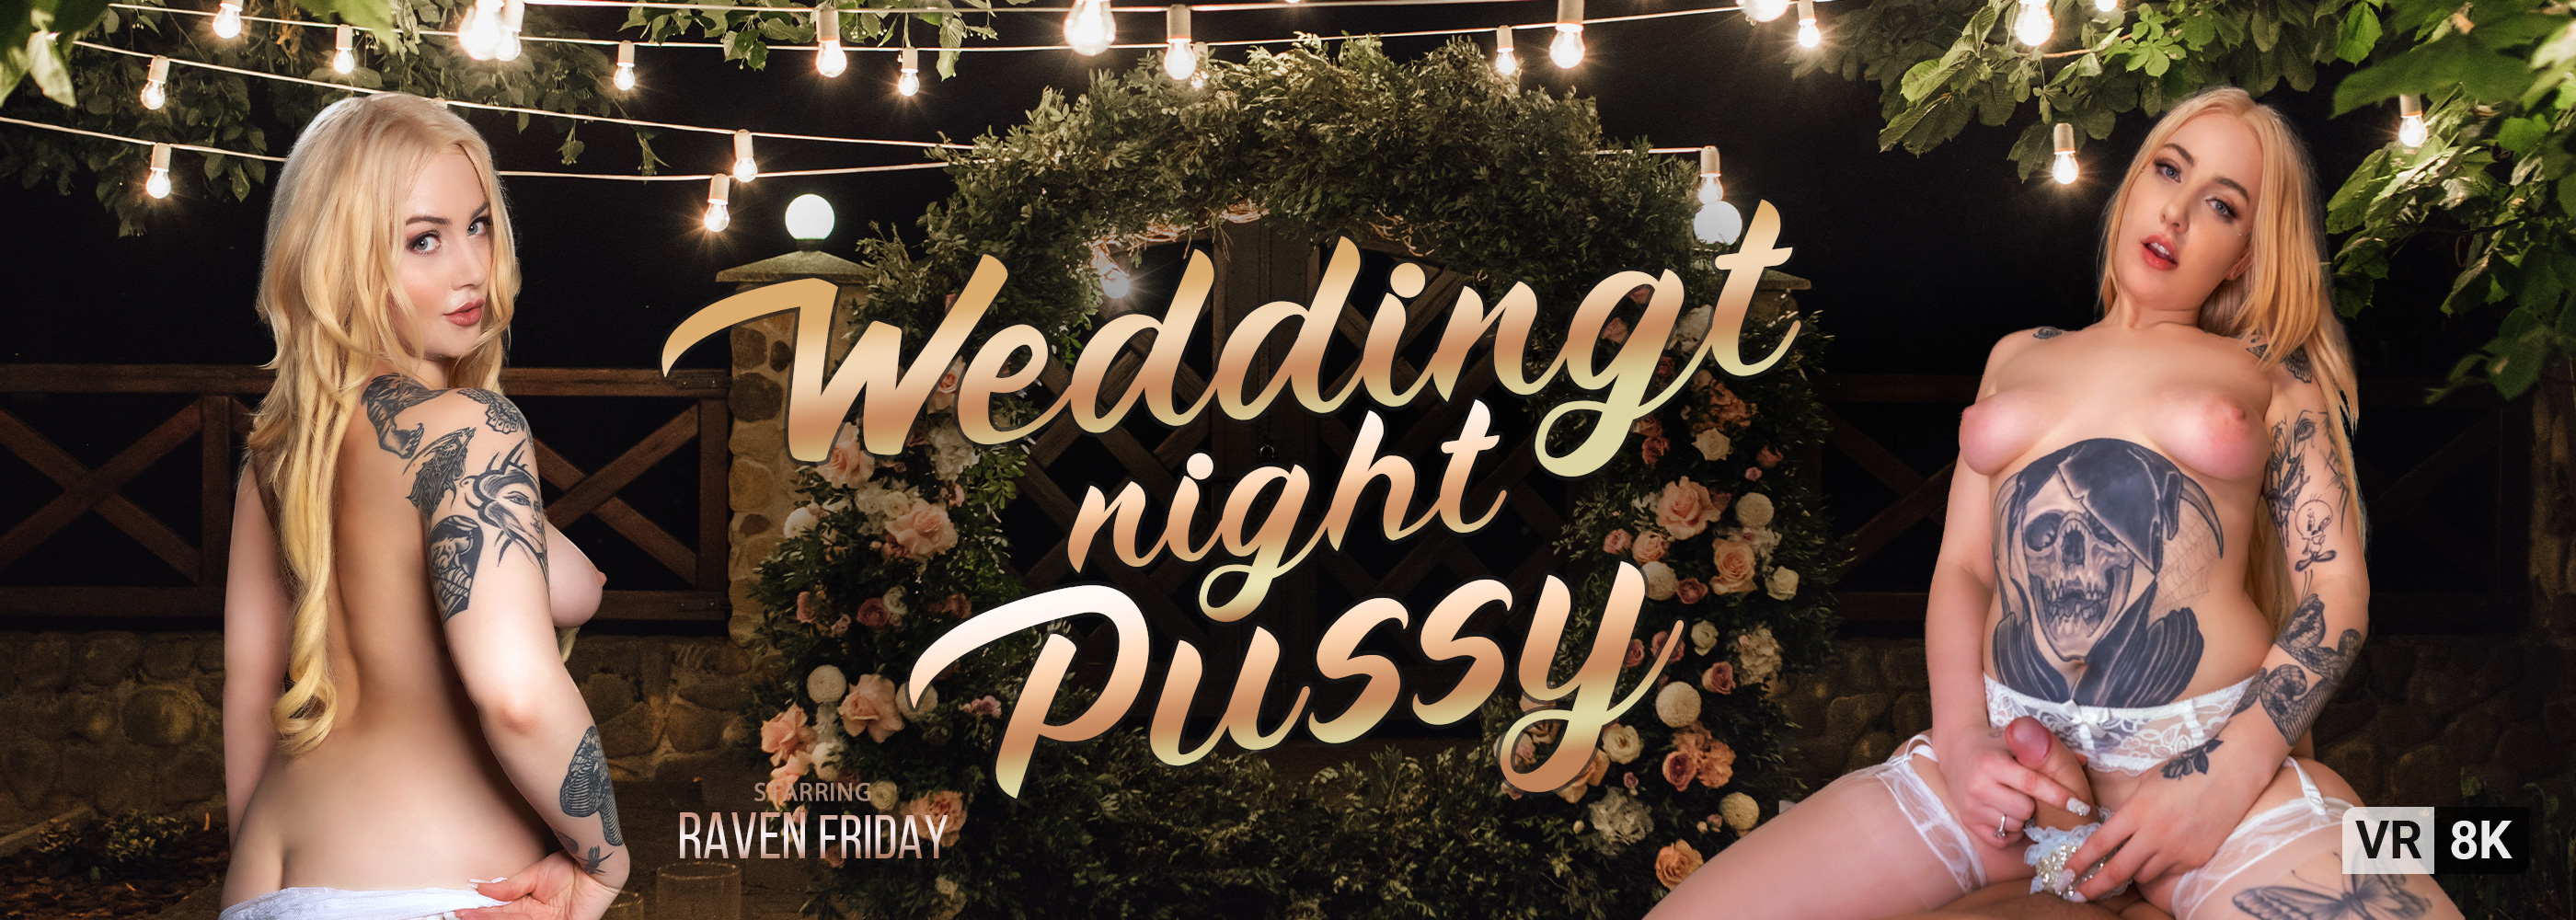 Wedding Night Pussy with Raven Friday  Slideshow